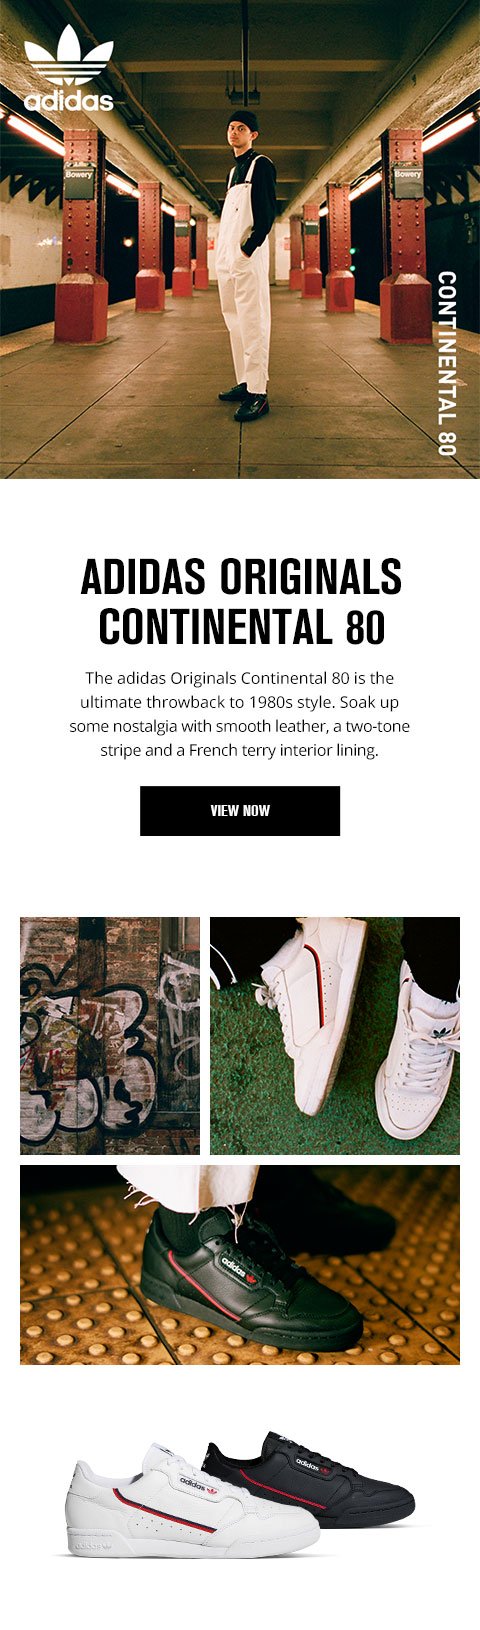 adidas originals continental 80 footlocker